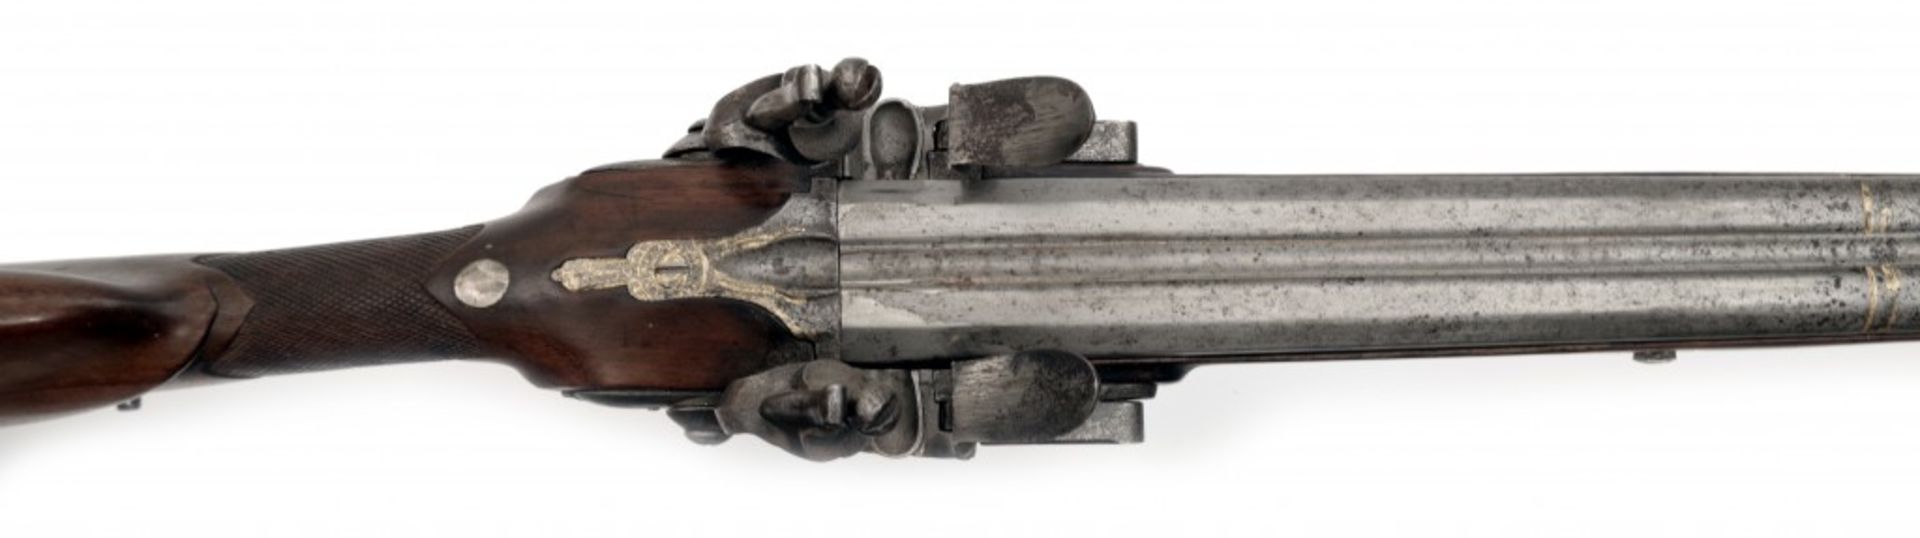 A Double-Barrelled Flintlock Shotgun - Image 4 of 7